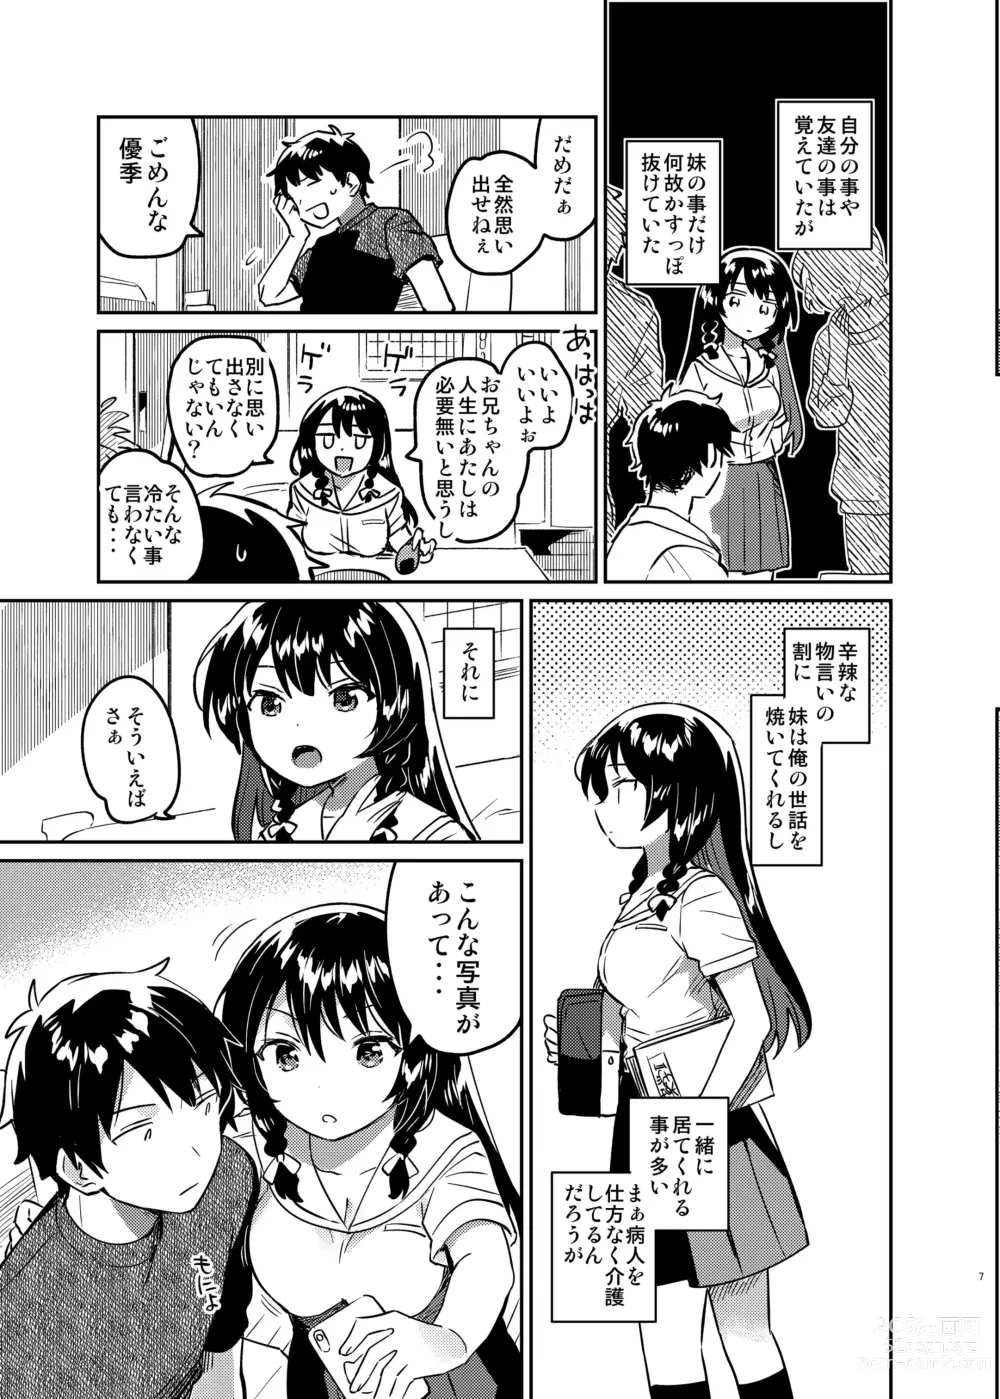 Page 6 of doujinshi Onii-chan wa Amnesia